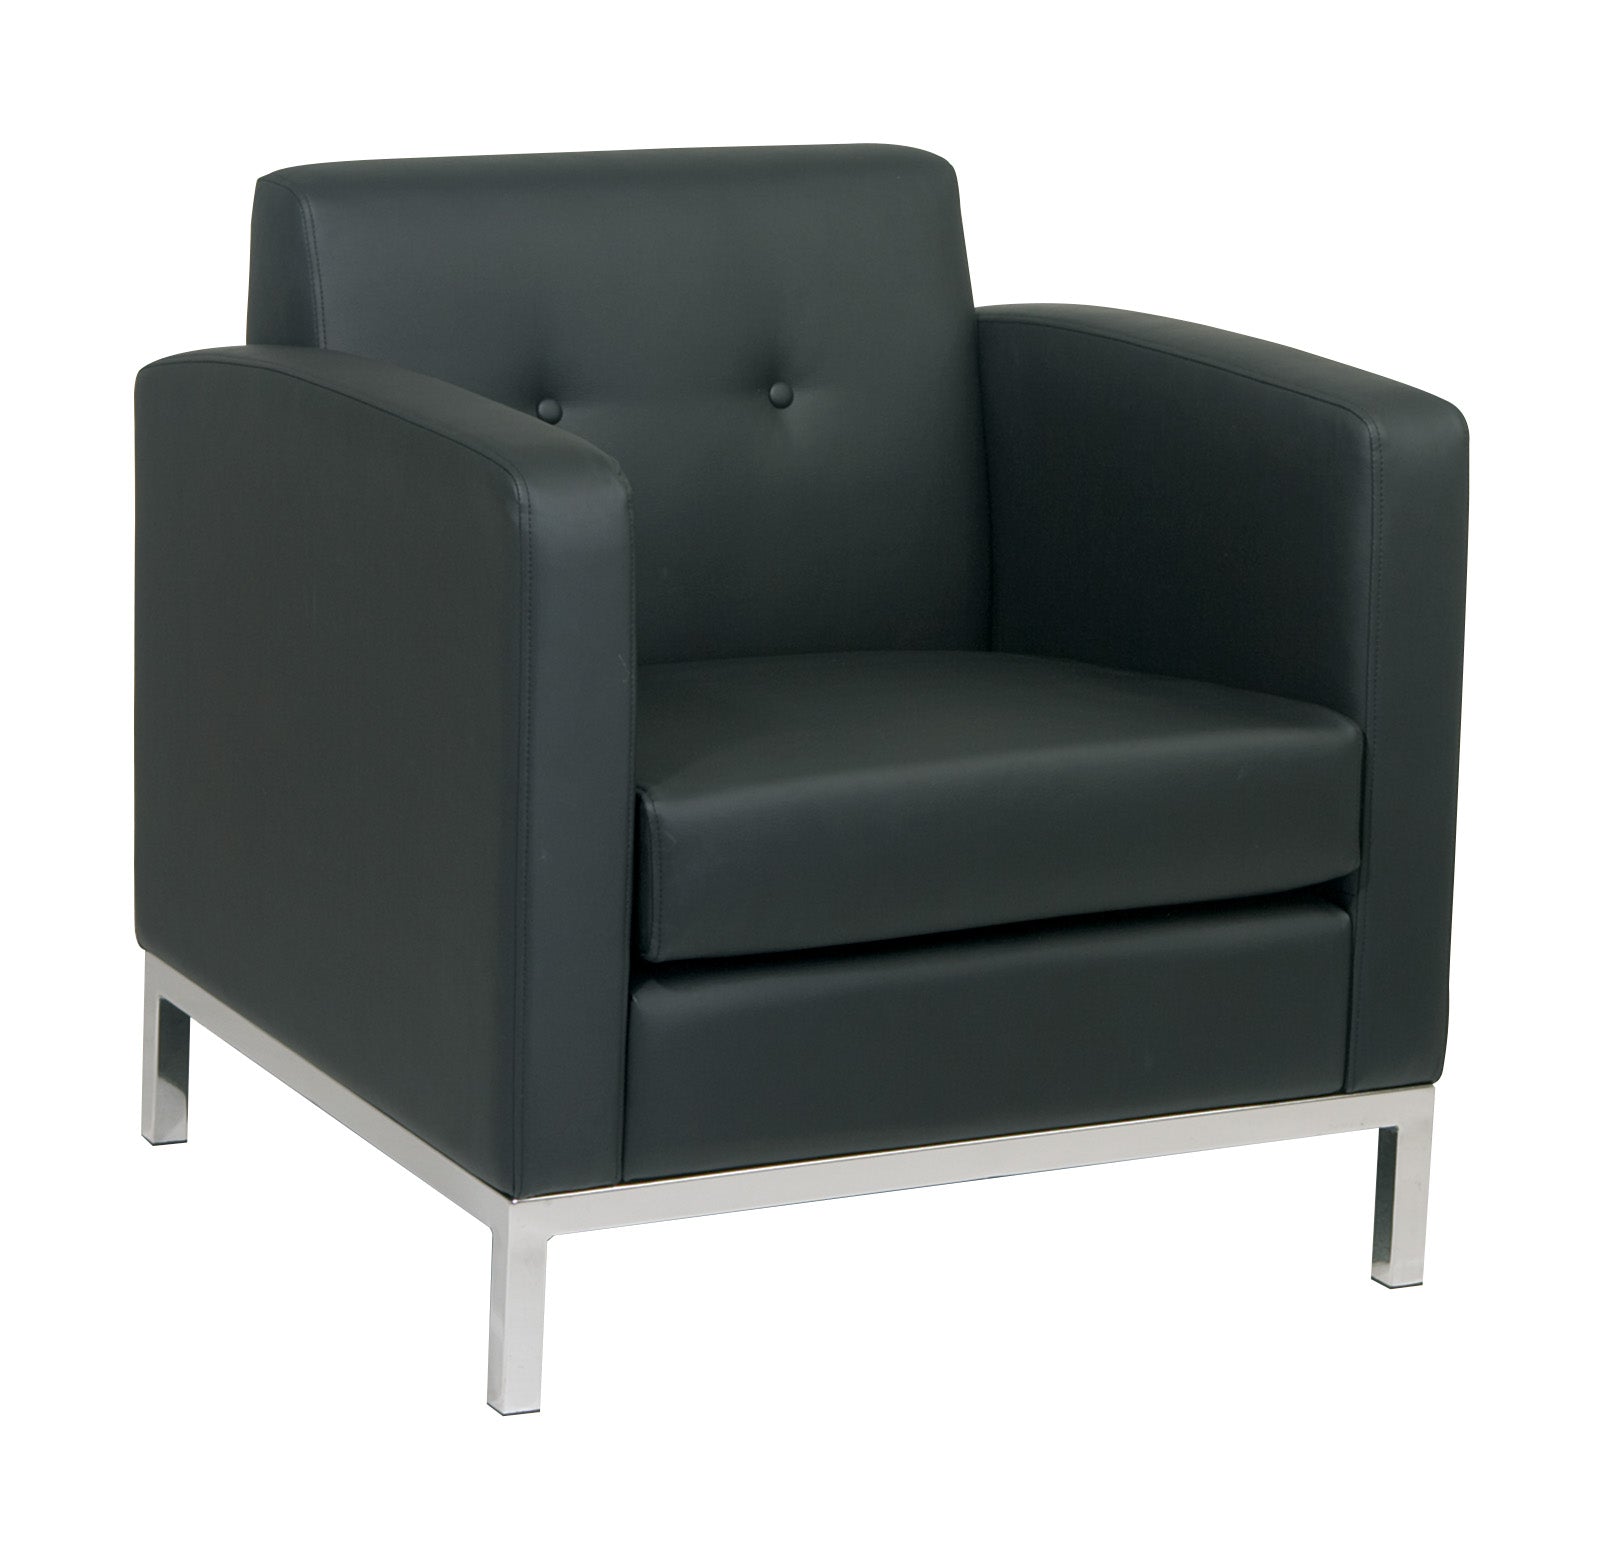 WST51A - Wall Street Arm Chair with Chrome Base